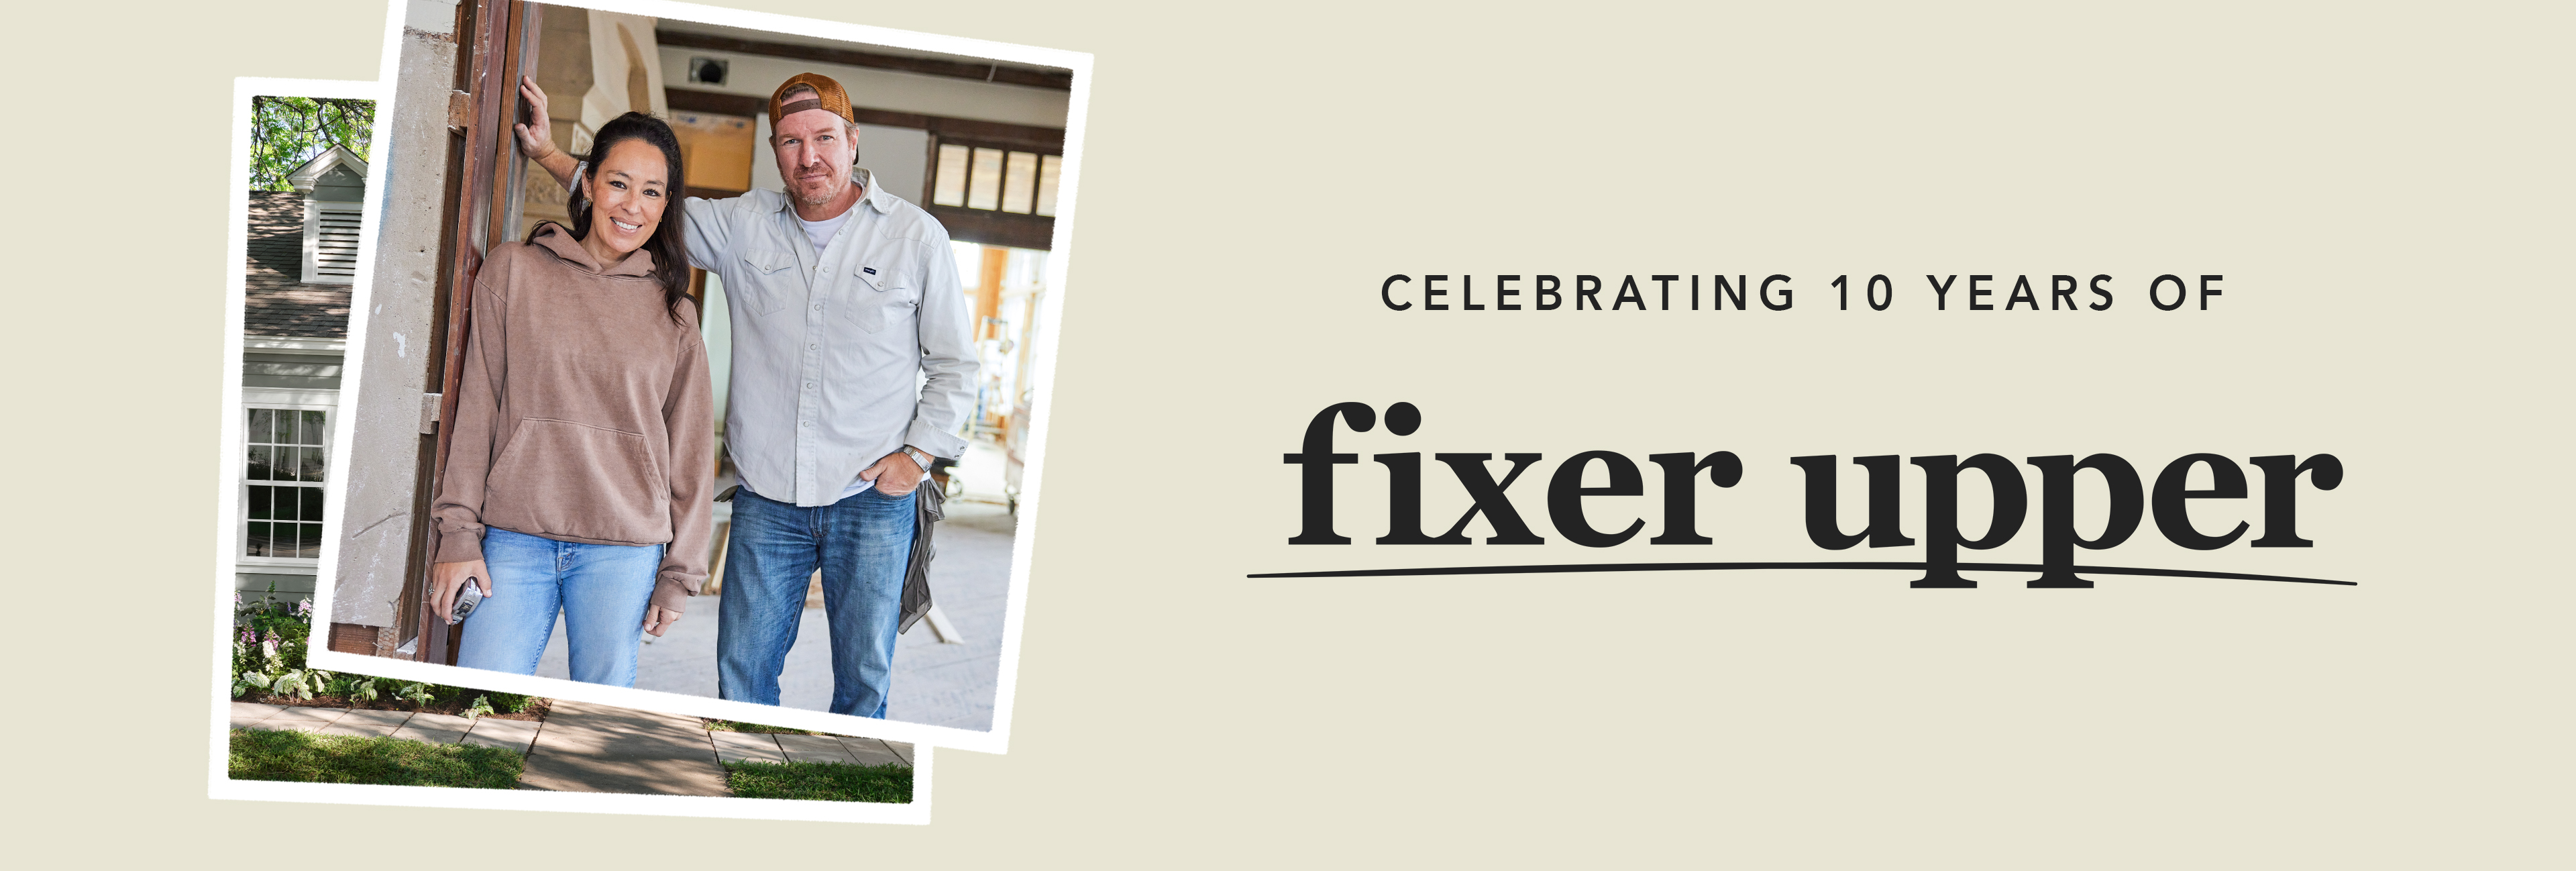 Celebrating 10 Yyars of fixer upper